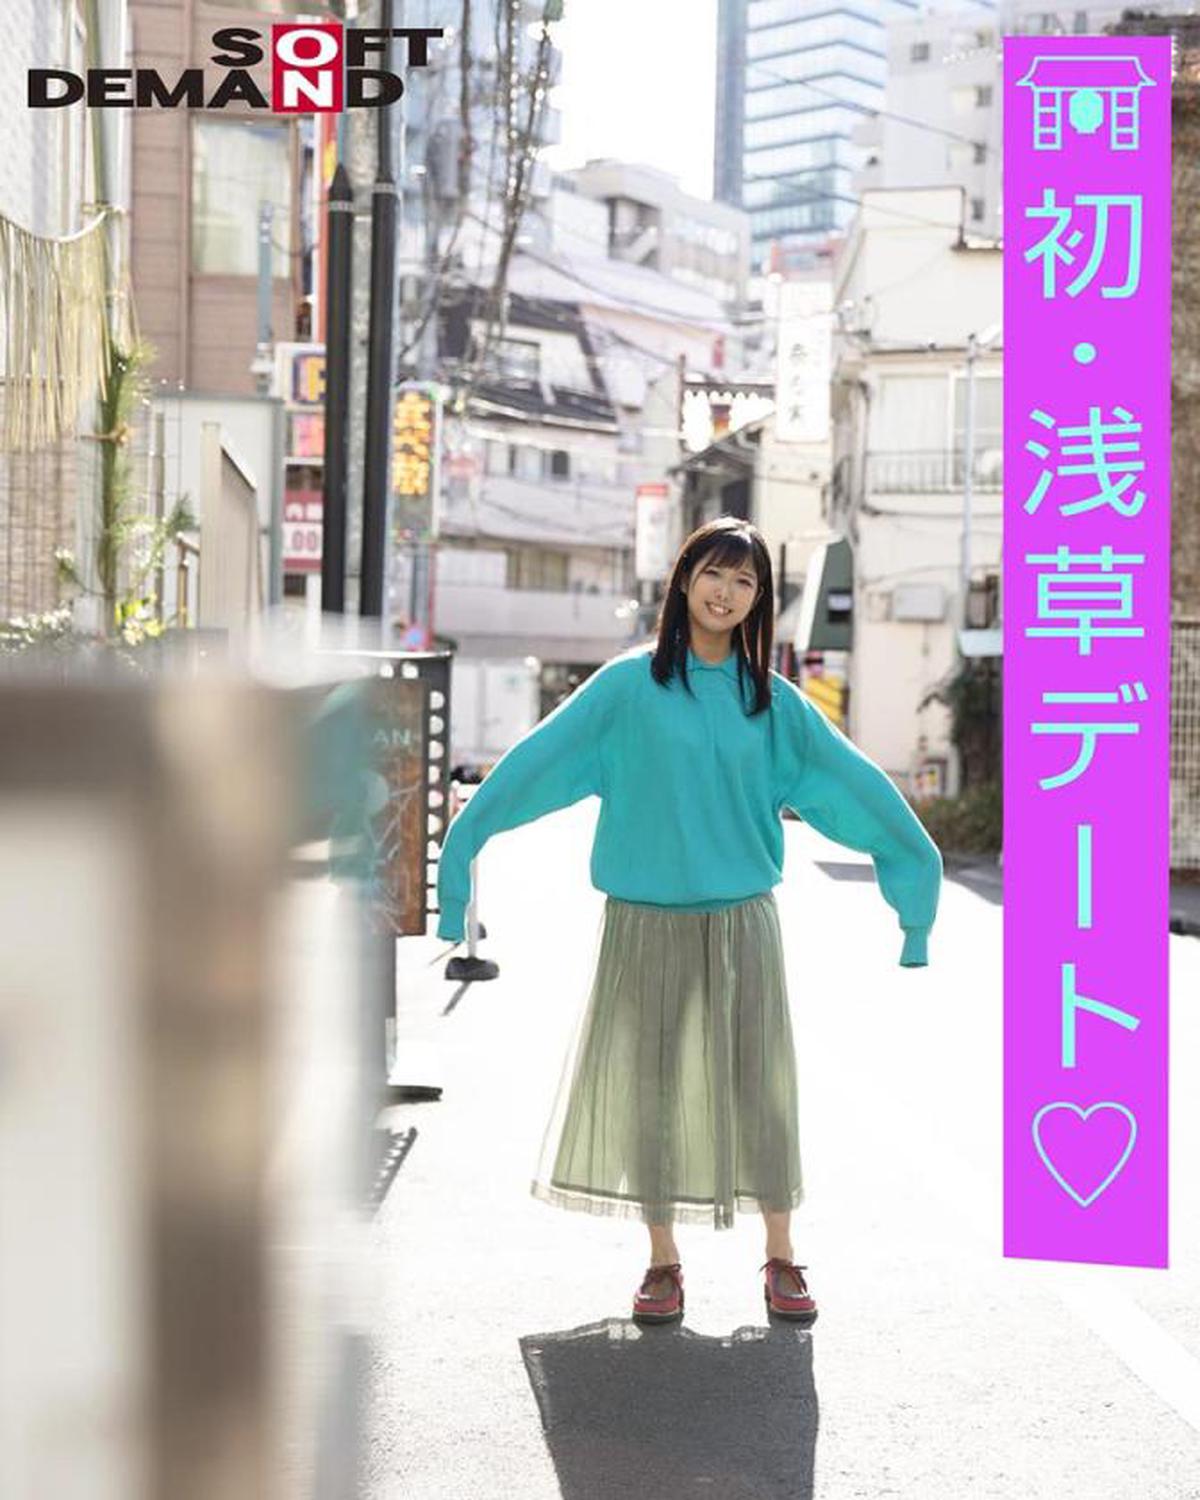 107EMOI-002 Emo Girl / First Asakusa Date / Tipsy Gonzo / Emi Suzukaze (23) / Living Alone in Kansai / Favorite Position